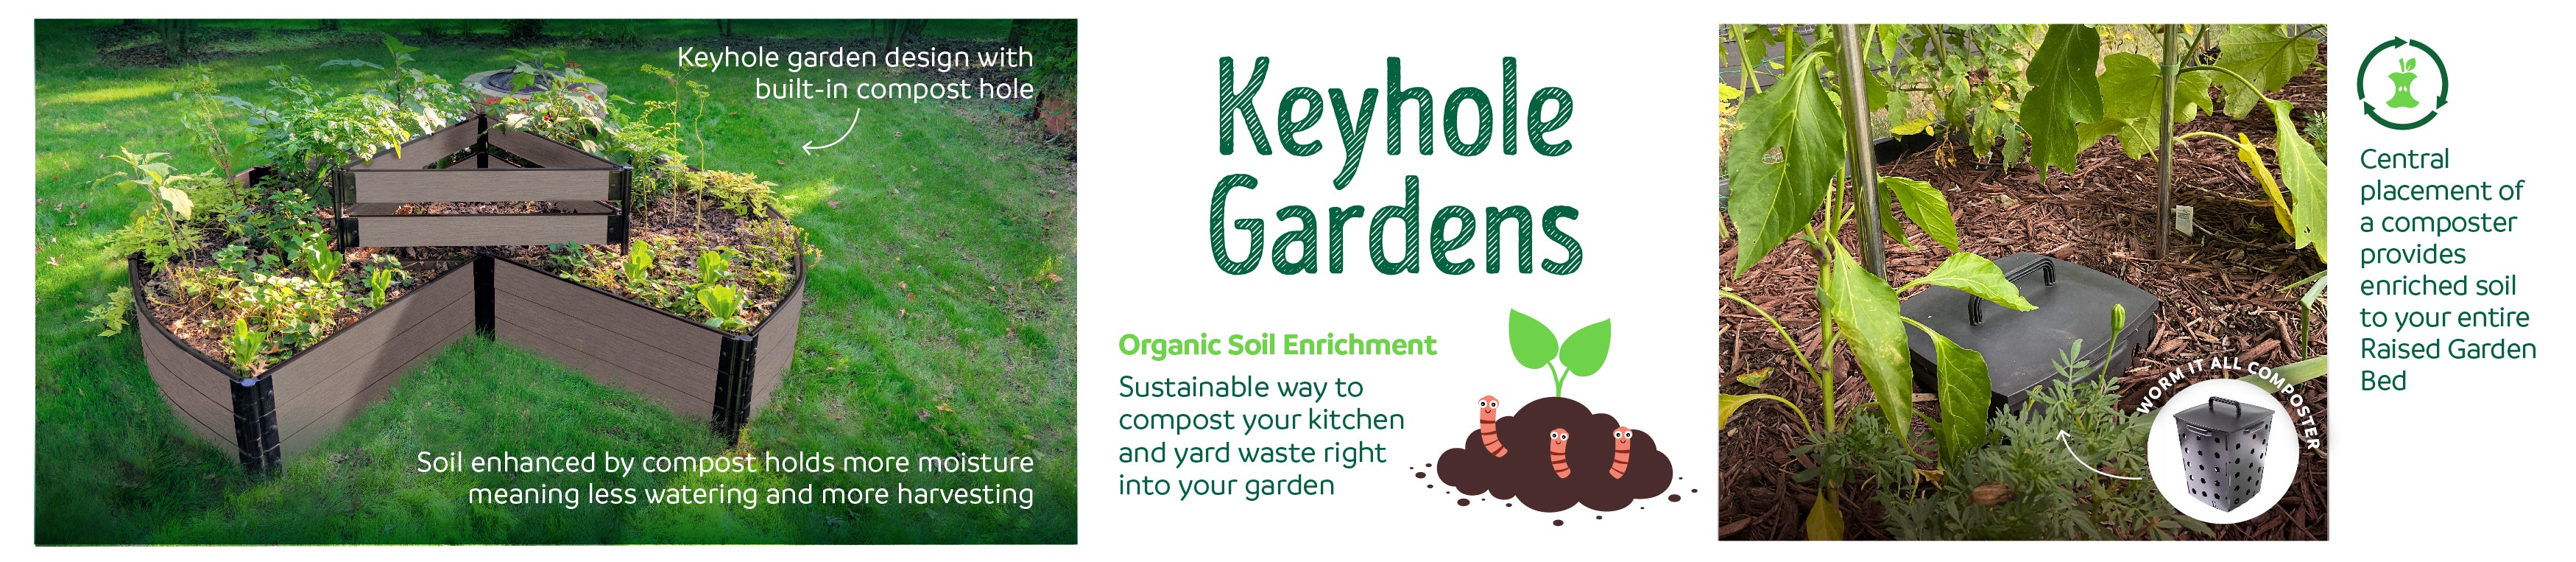 Keyhole raised garden beds banner image